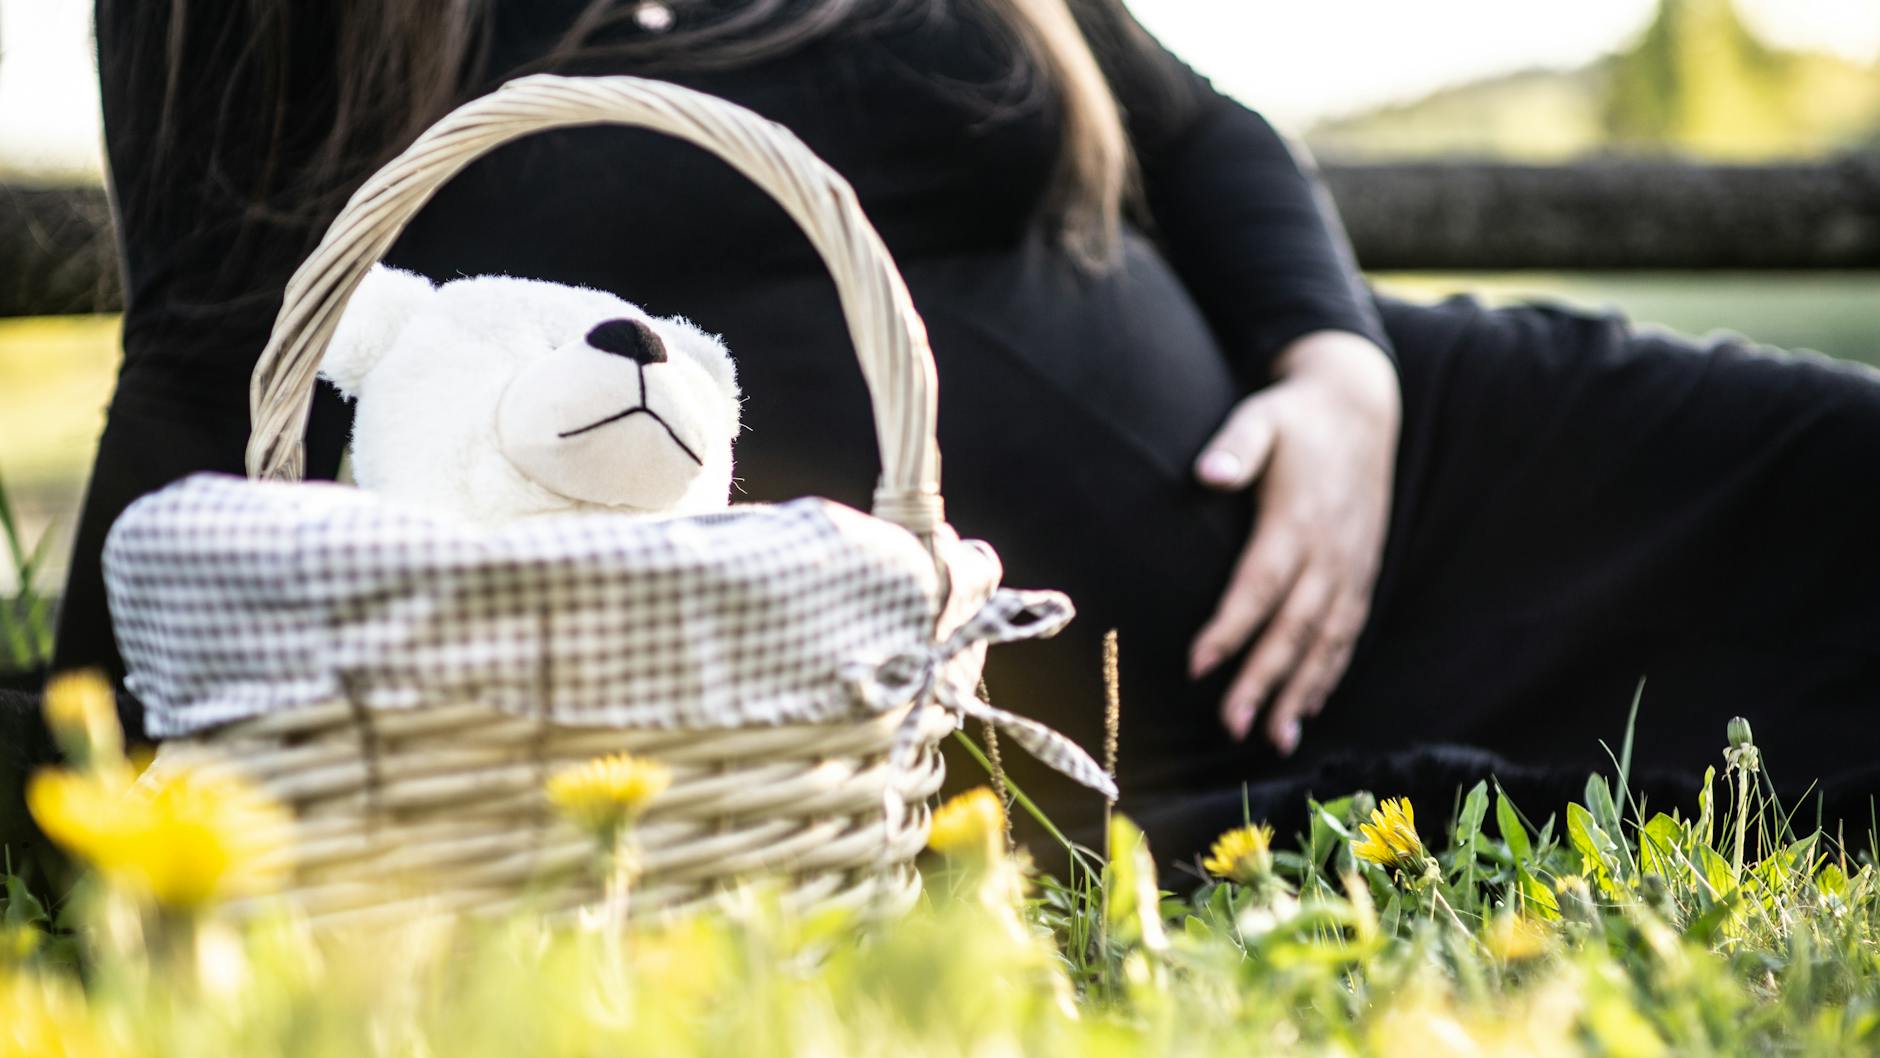 pregnant woman sitting on grass near picnic basket